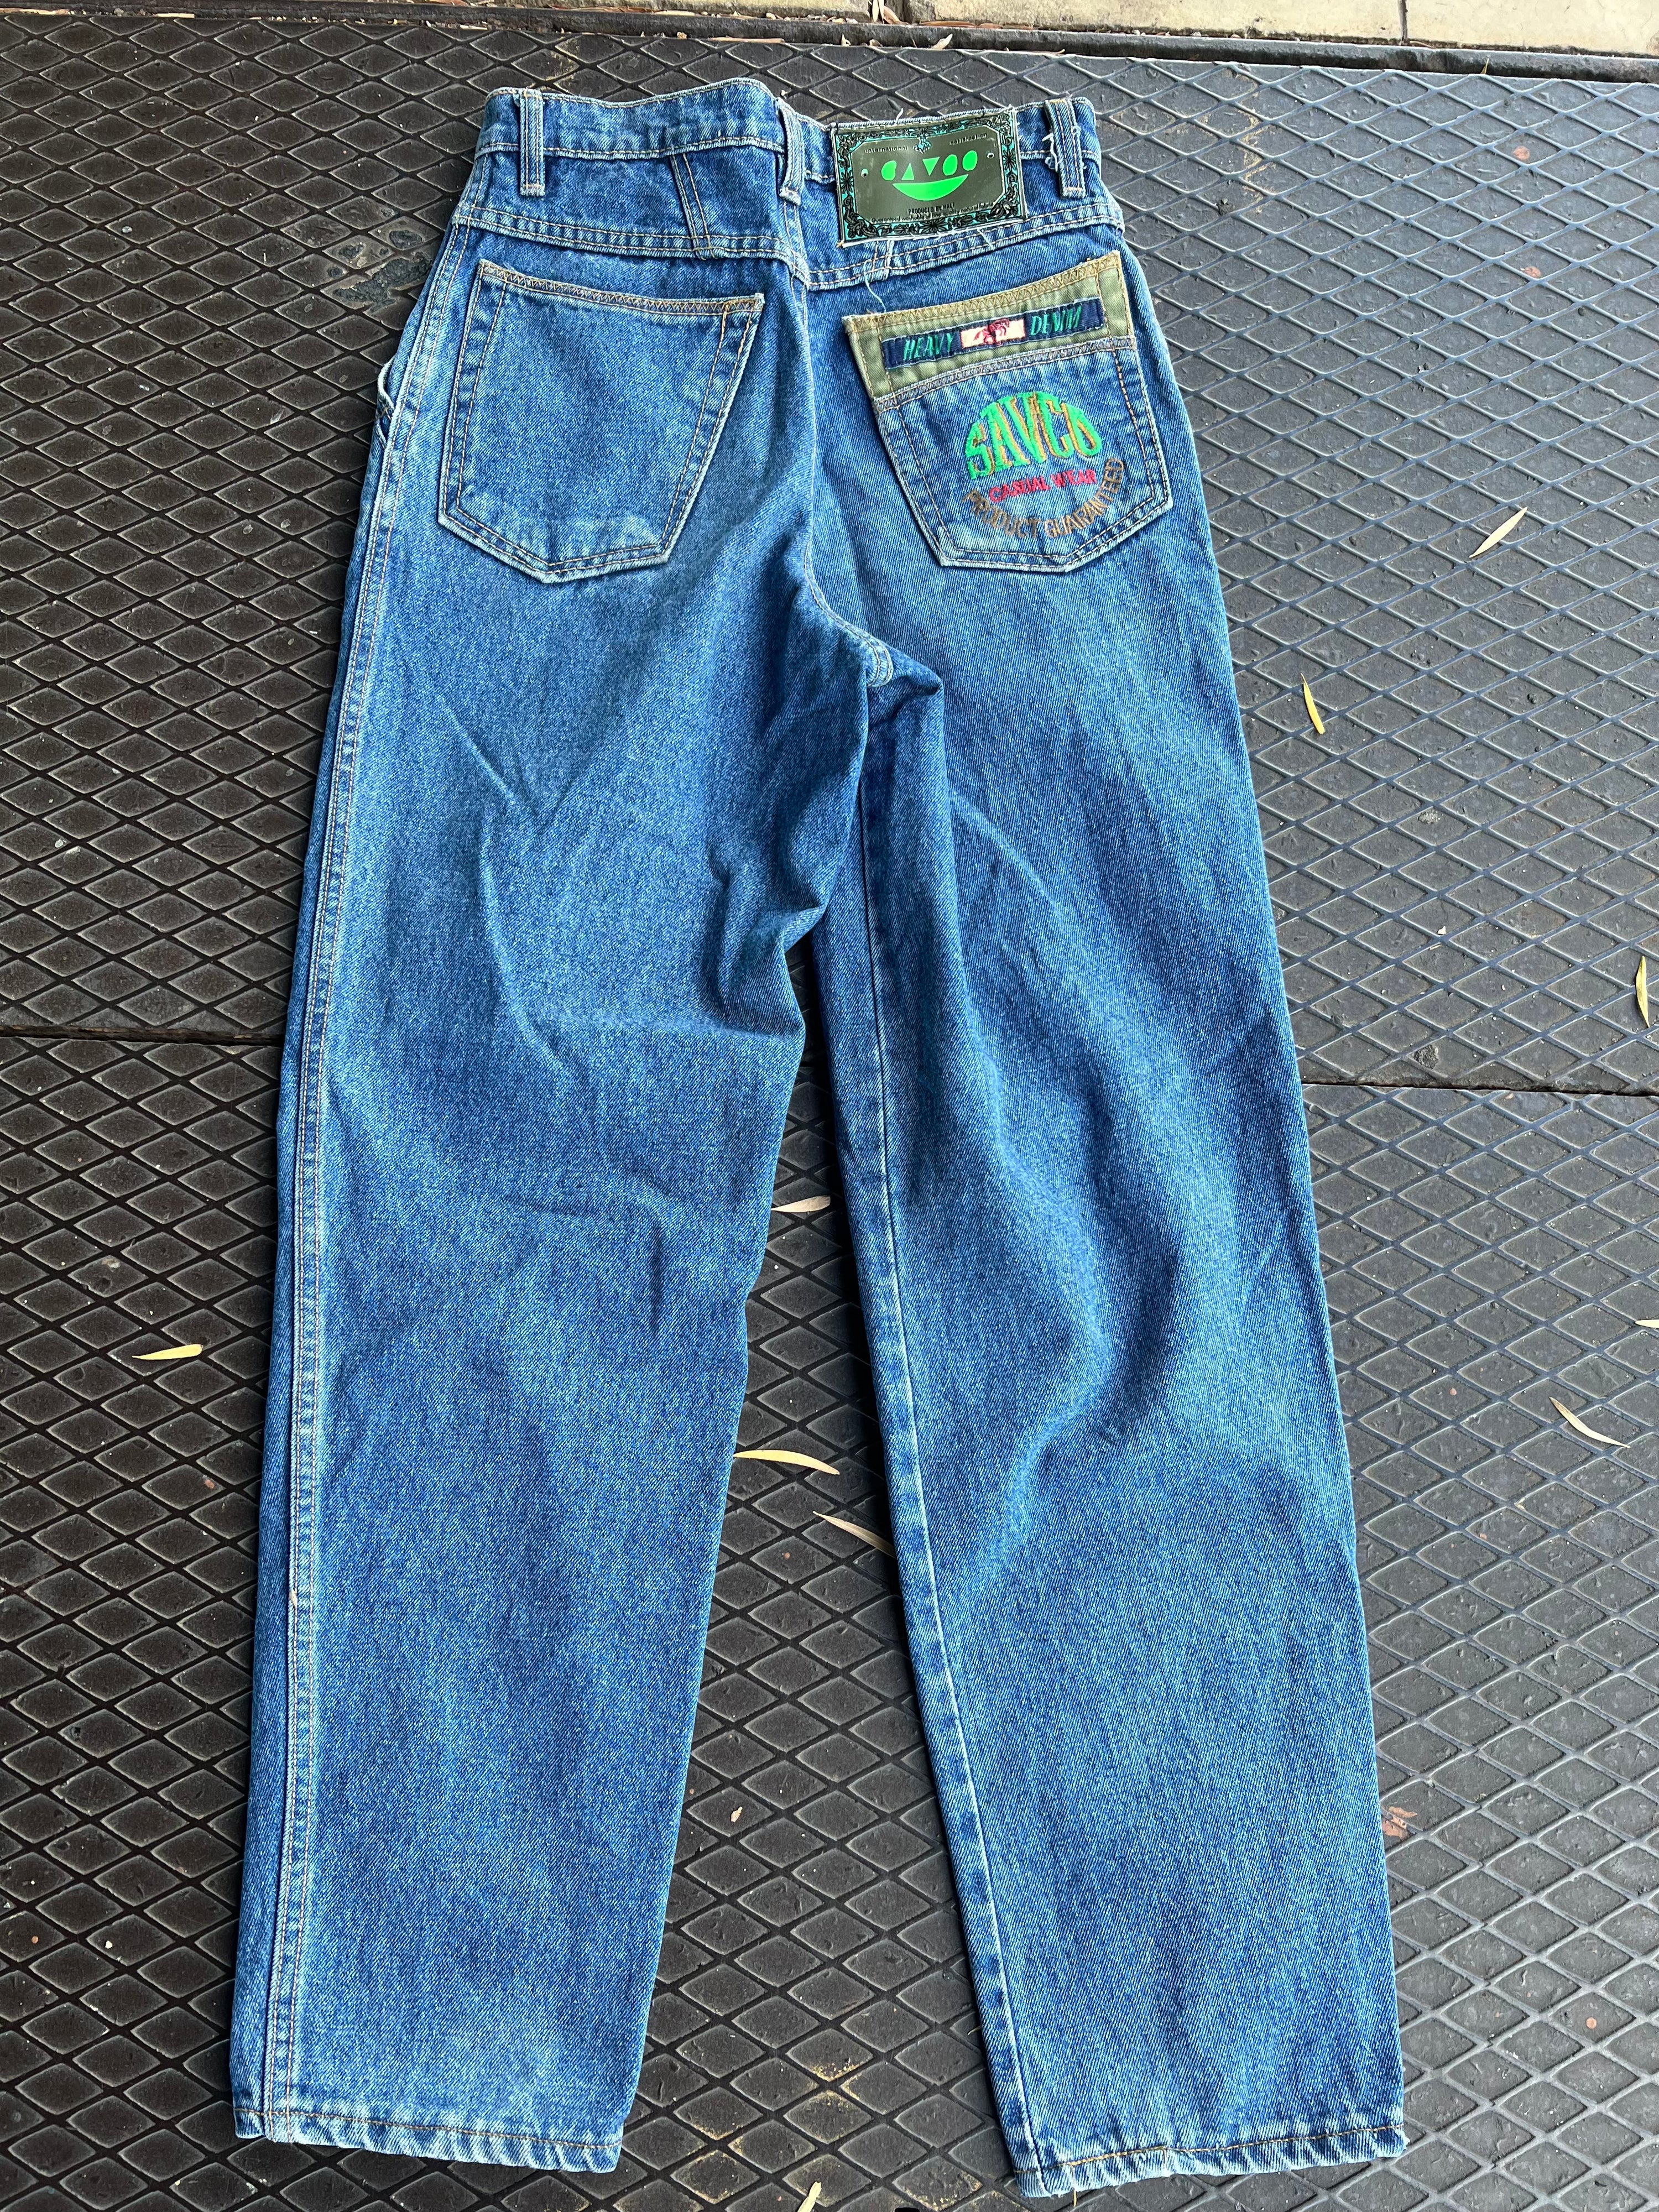 29 - Savco Embroidered Heavy Denim Jeans